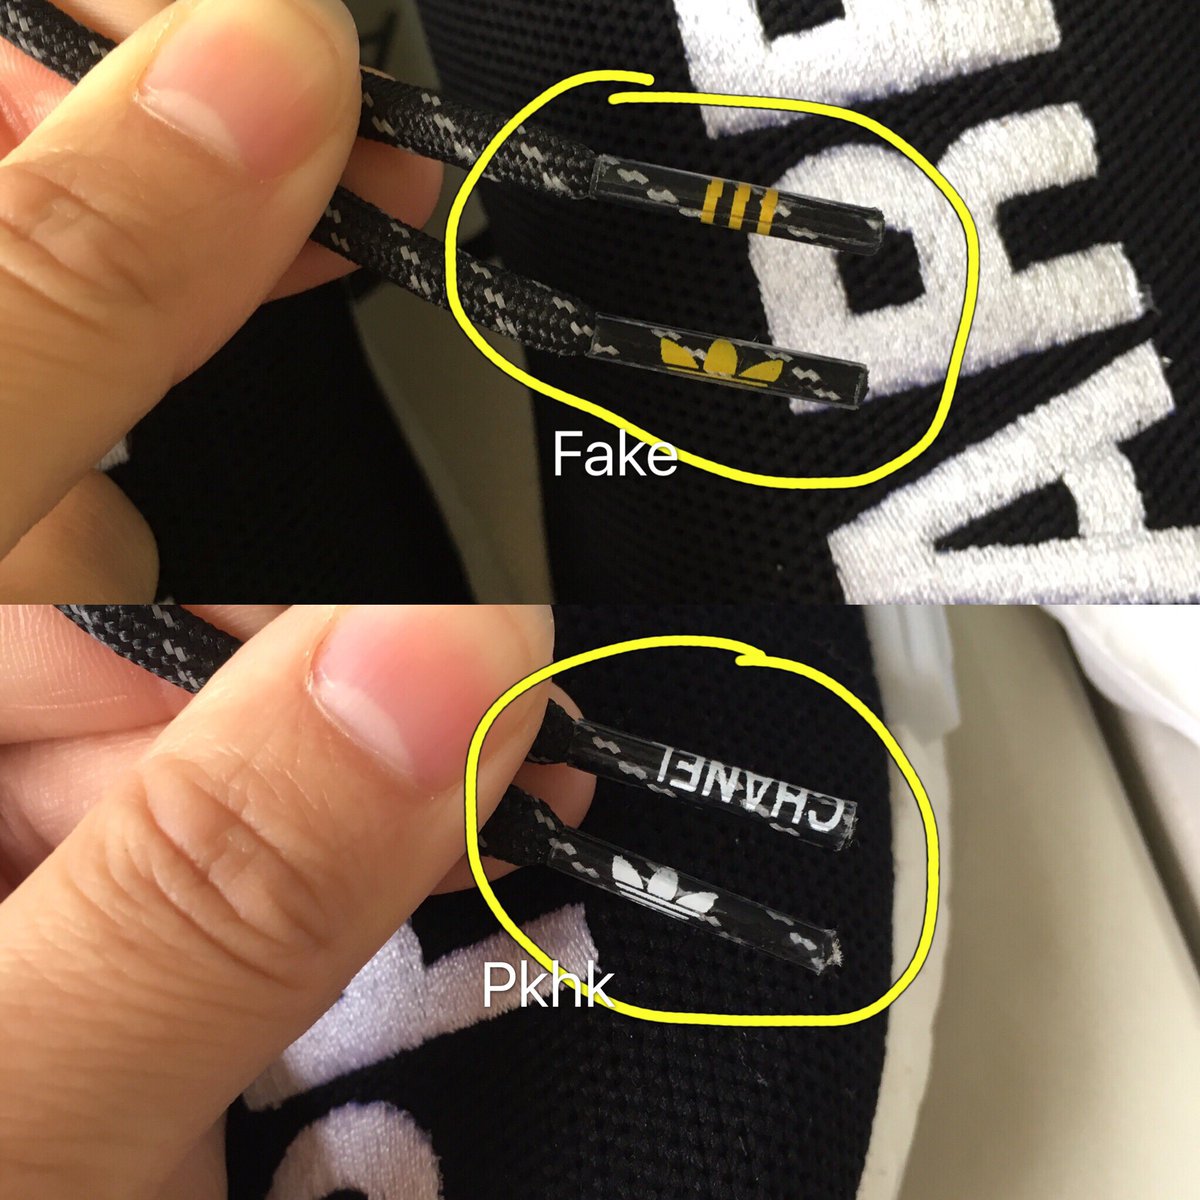 chanel pharrell adidas real vs fake